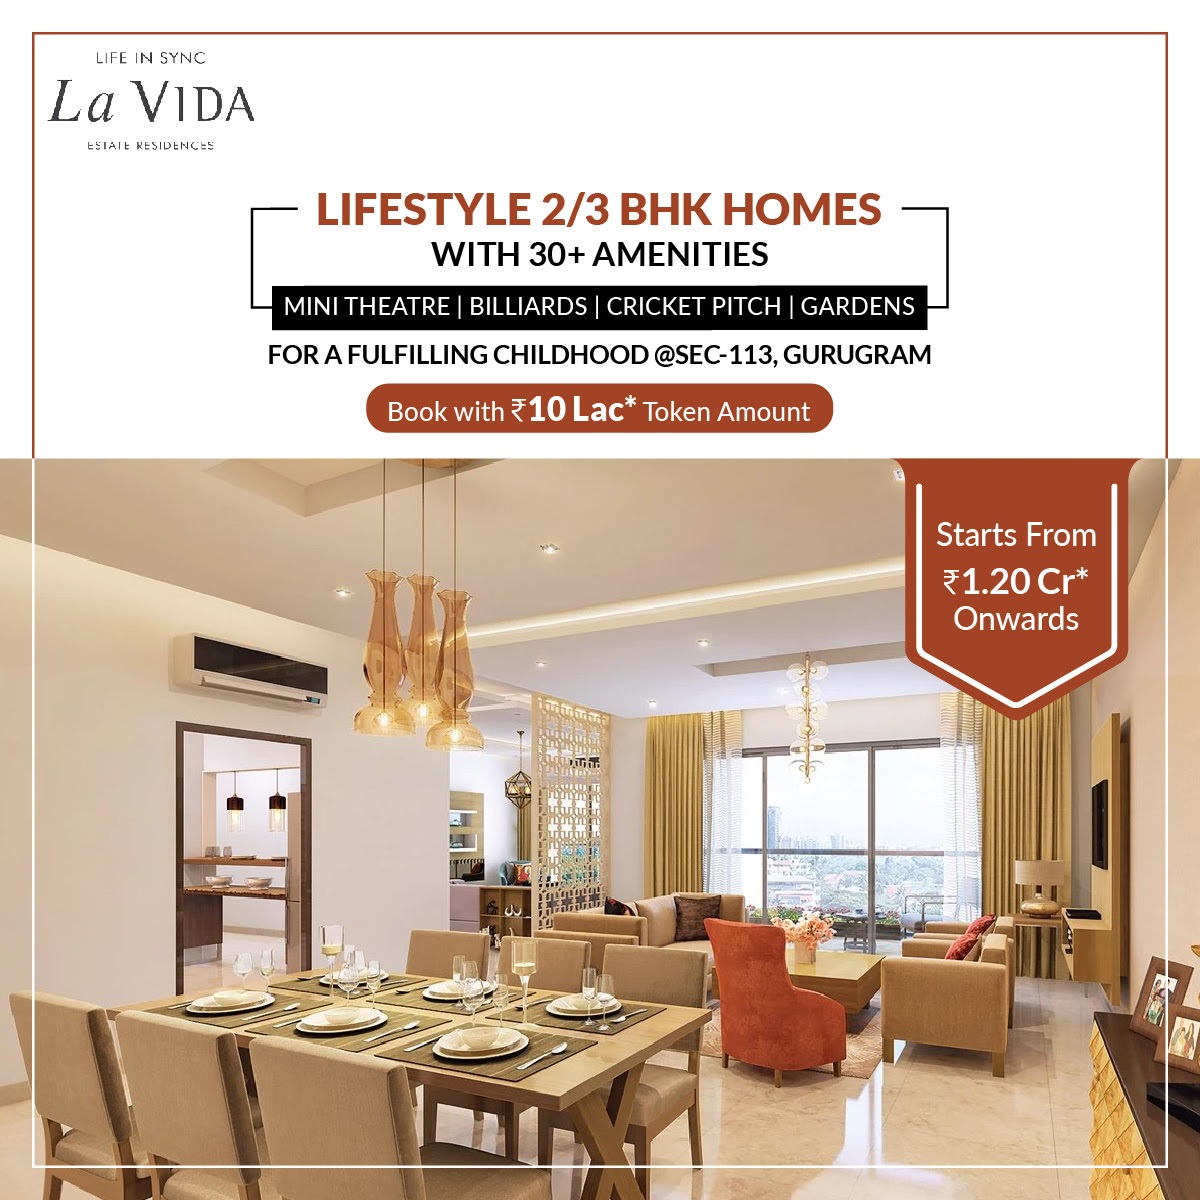 Lifestyle 2 and 3 BHK home with 30+ amenities at Tata La Vida, Gurgaon Update